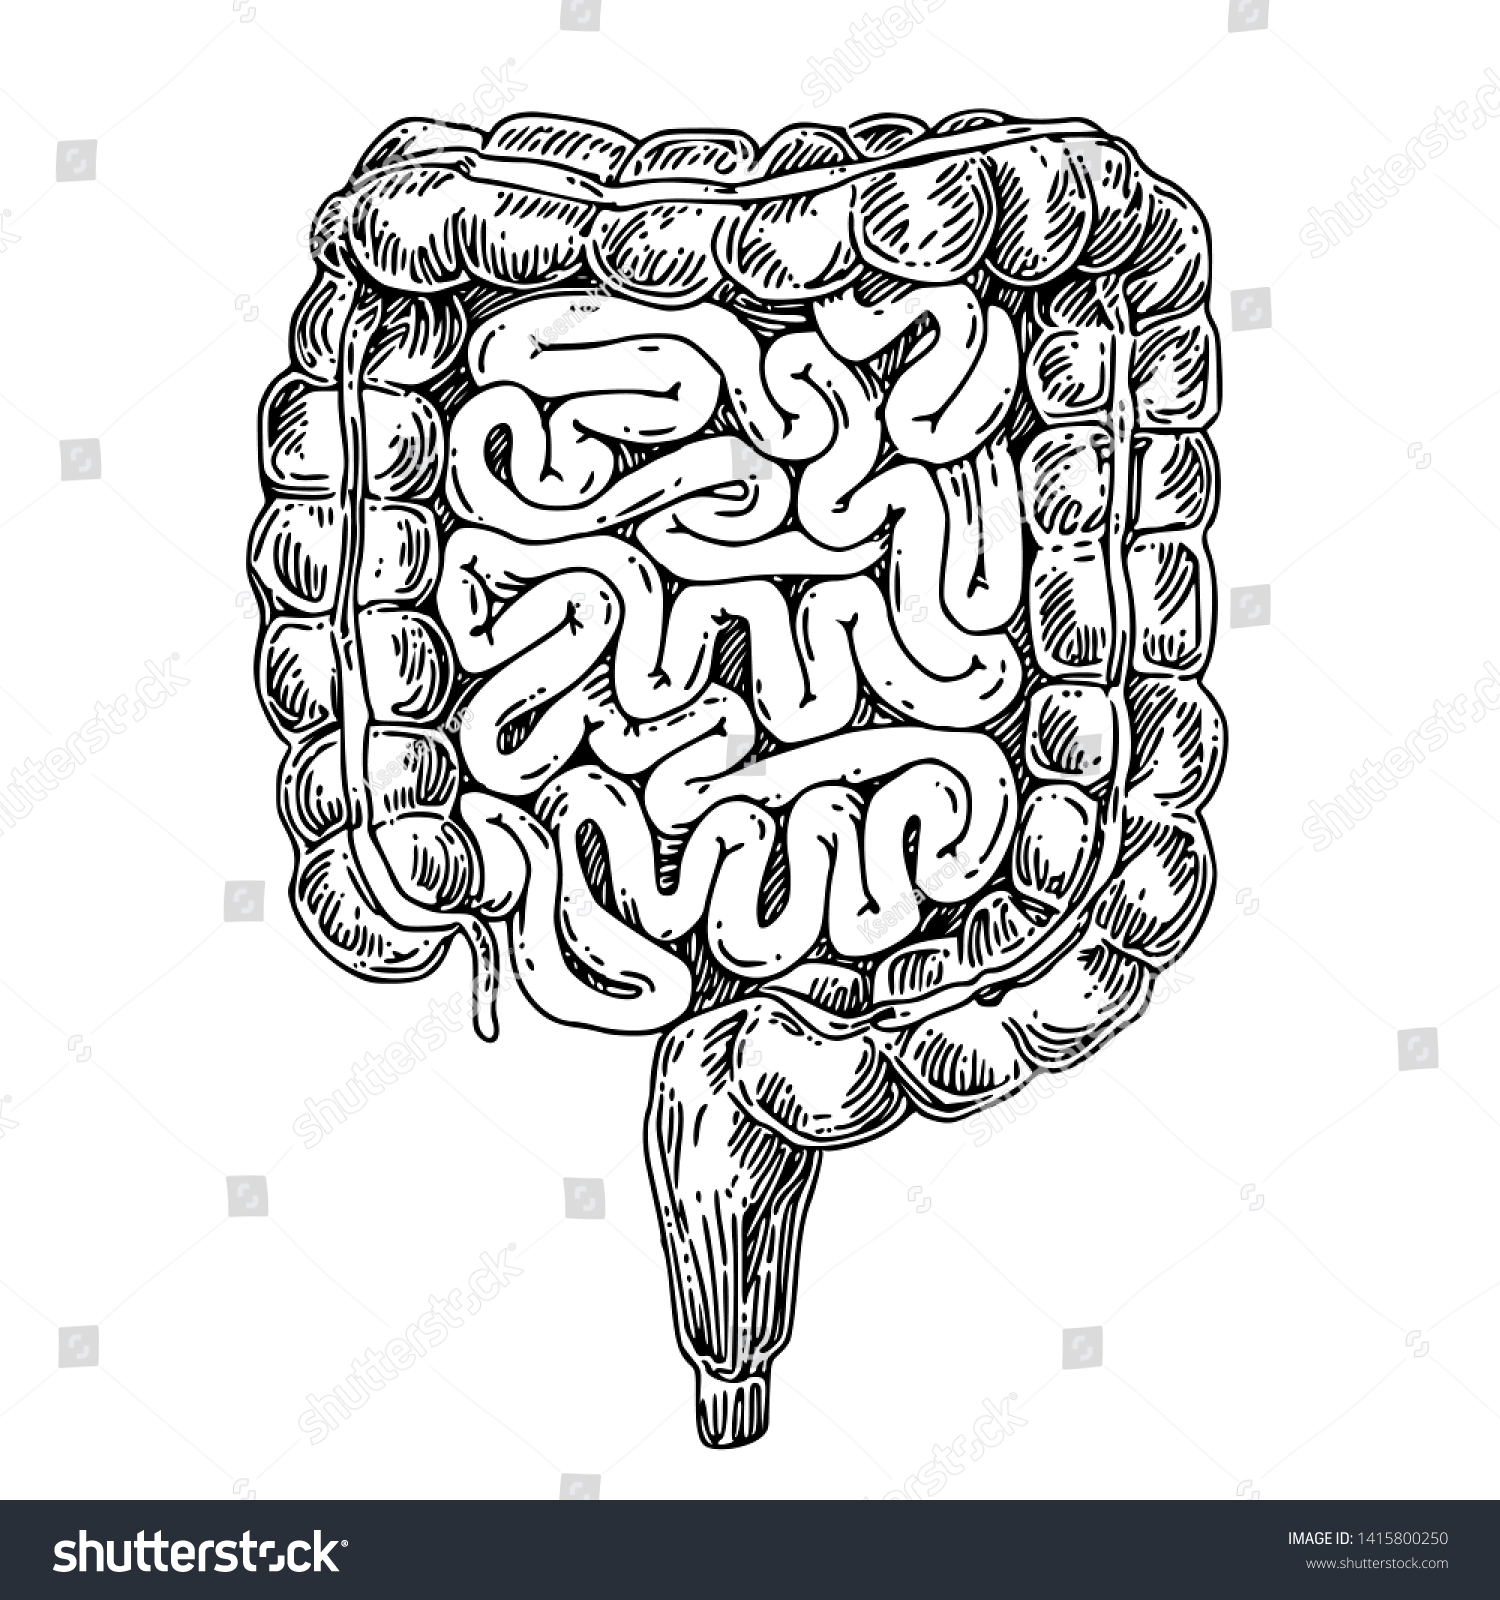 Human Anatomy Large Small Intestine Sketch Stock Vector (Royalty Free ...